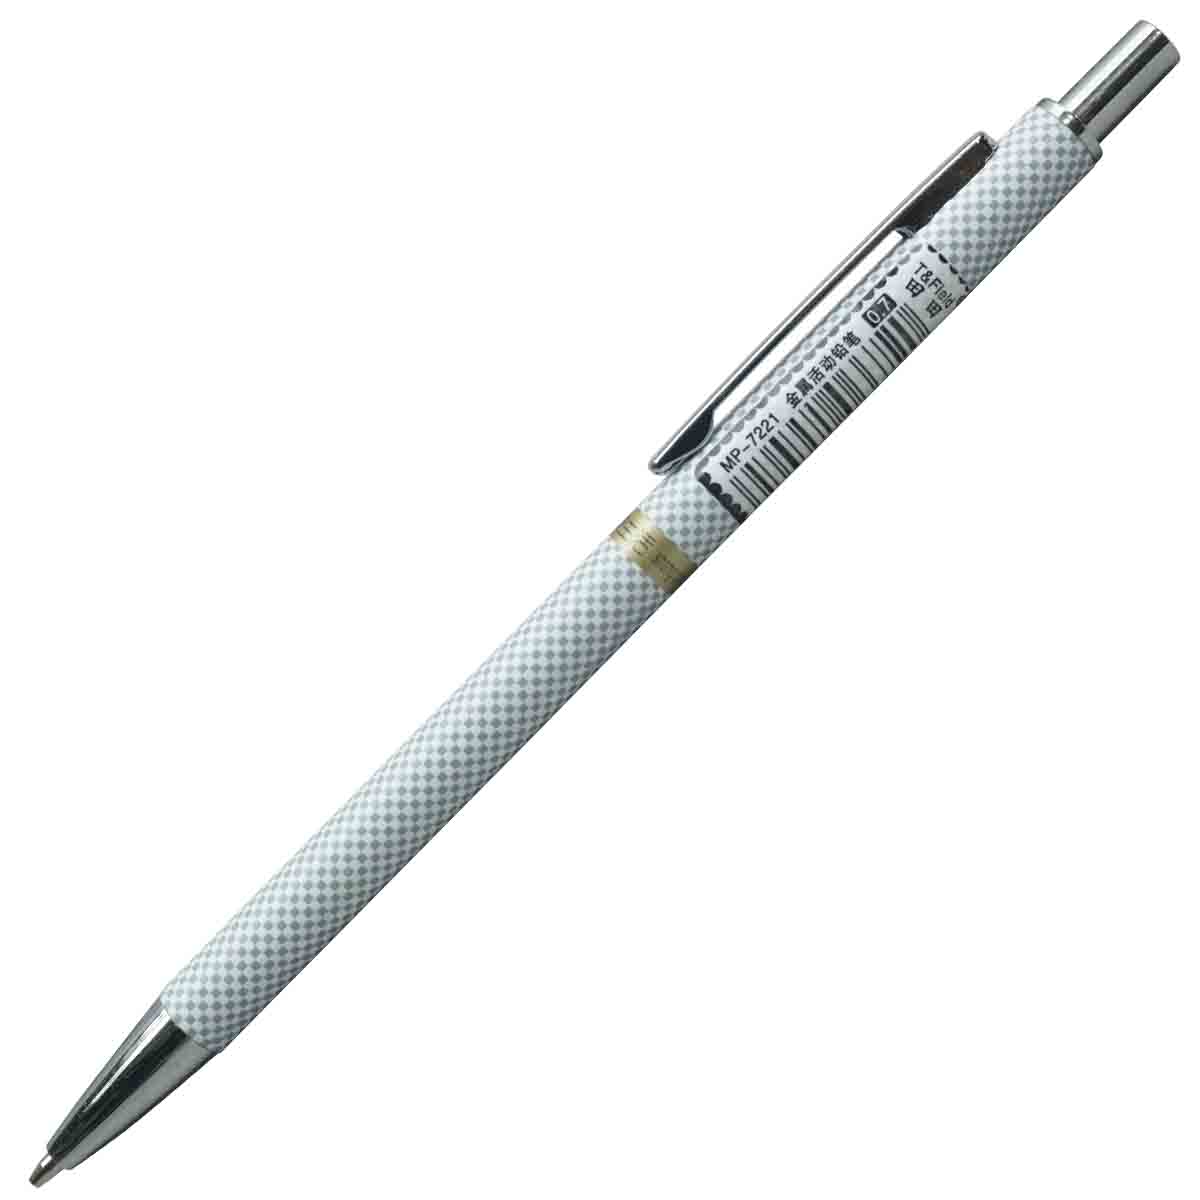 Luoshi 0.7mm Mechanical Pencil SKU 50030